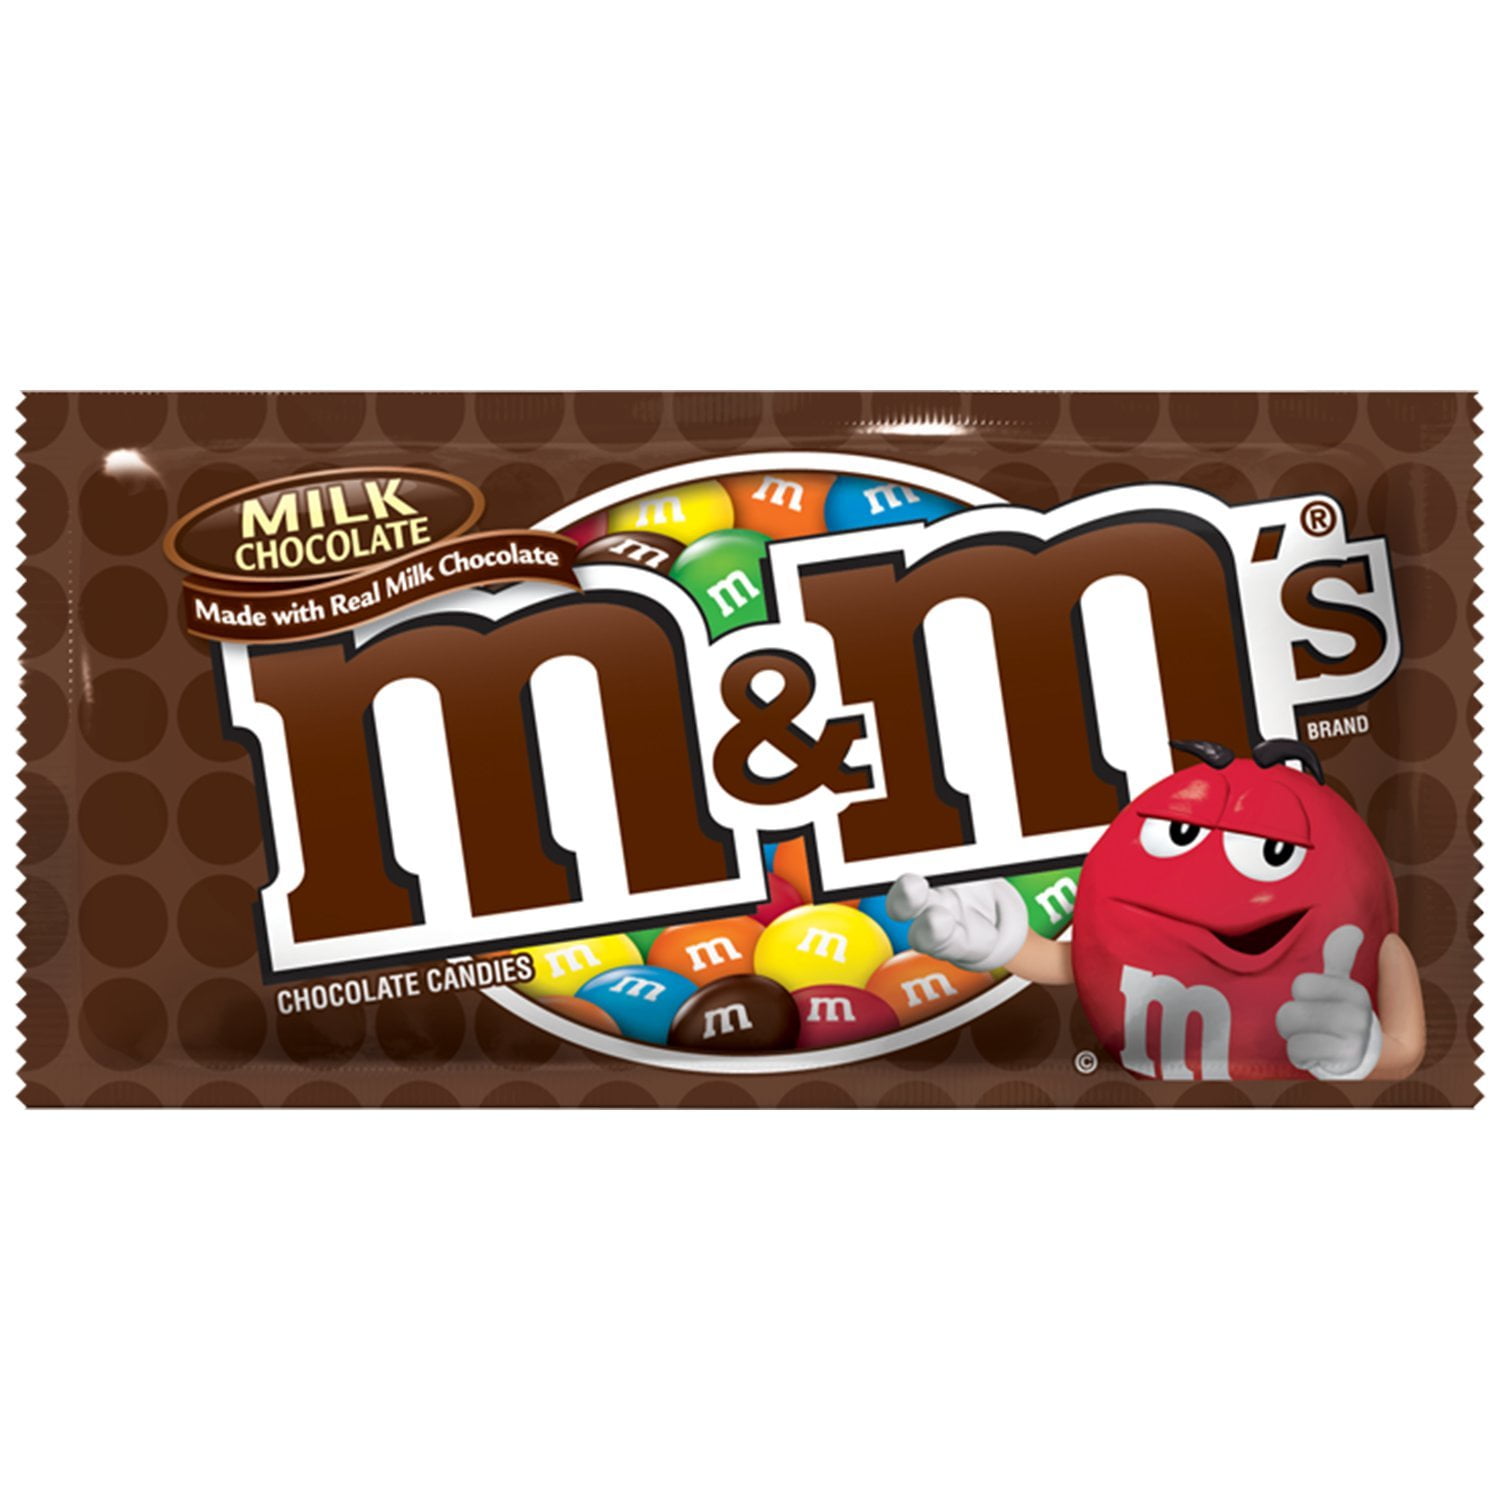 M&M's Milk Chocolate Halloween Fun Size Chocolate Candy - 17.16 oz Bag